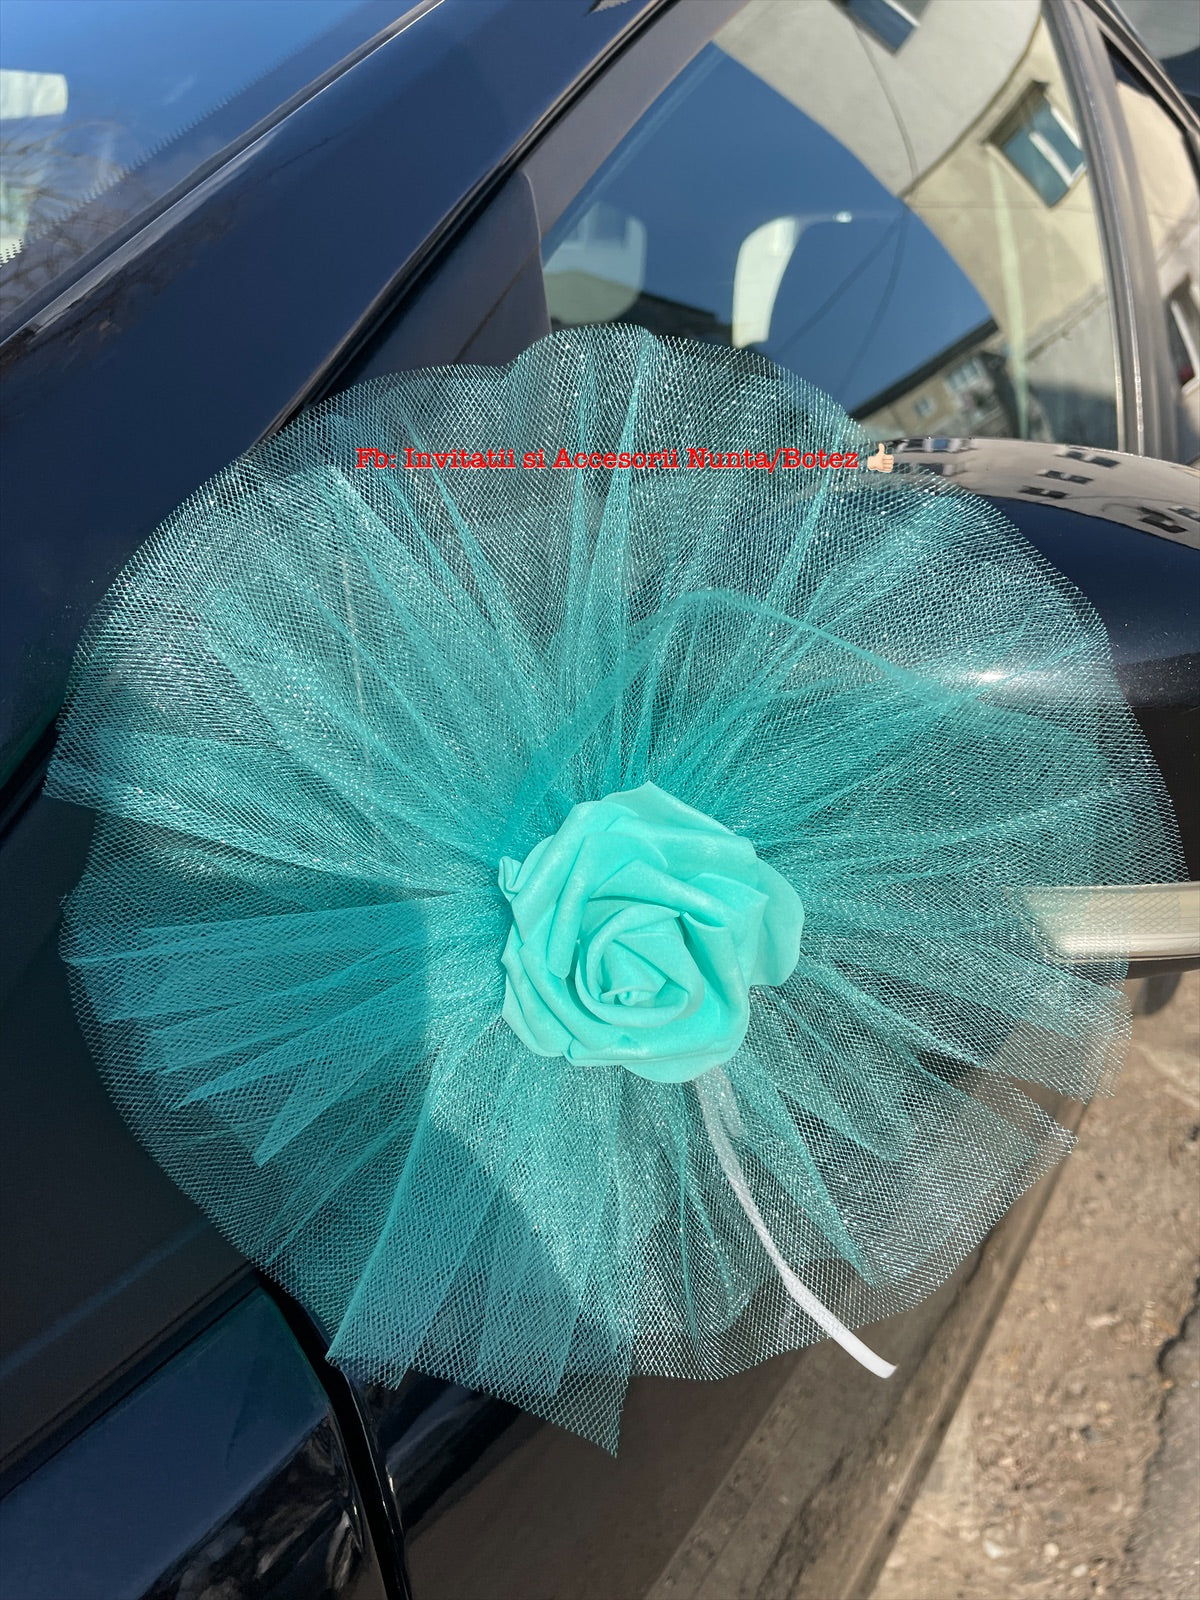 Pompoane cu trandafir pentru oglinzi masini invitati nunta